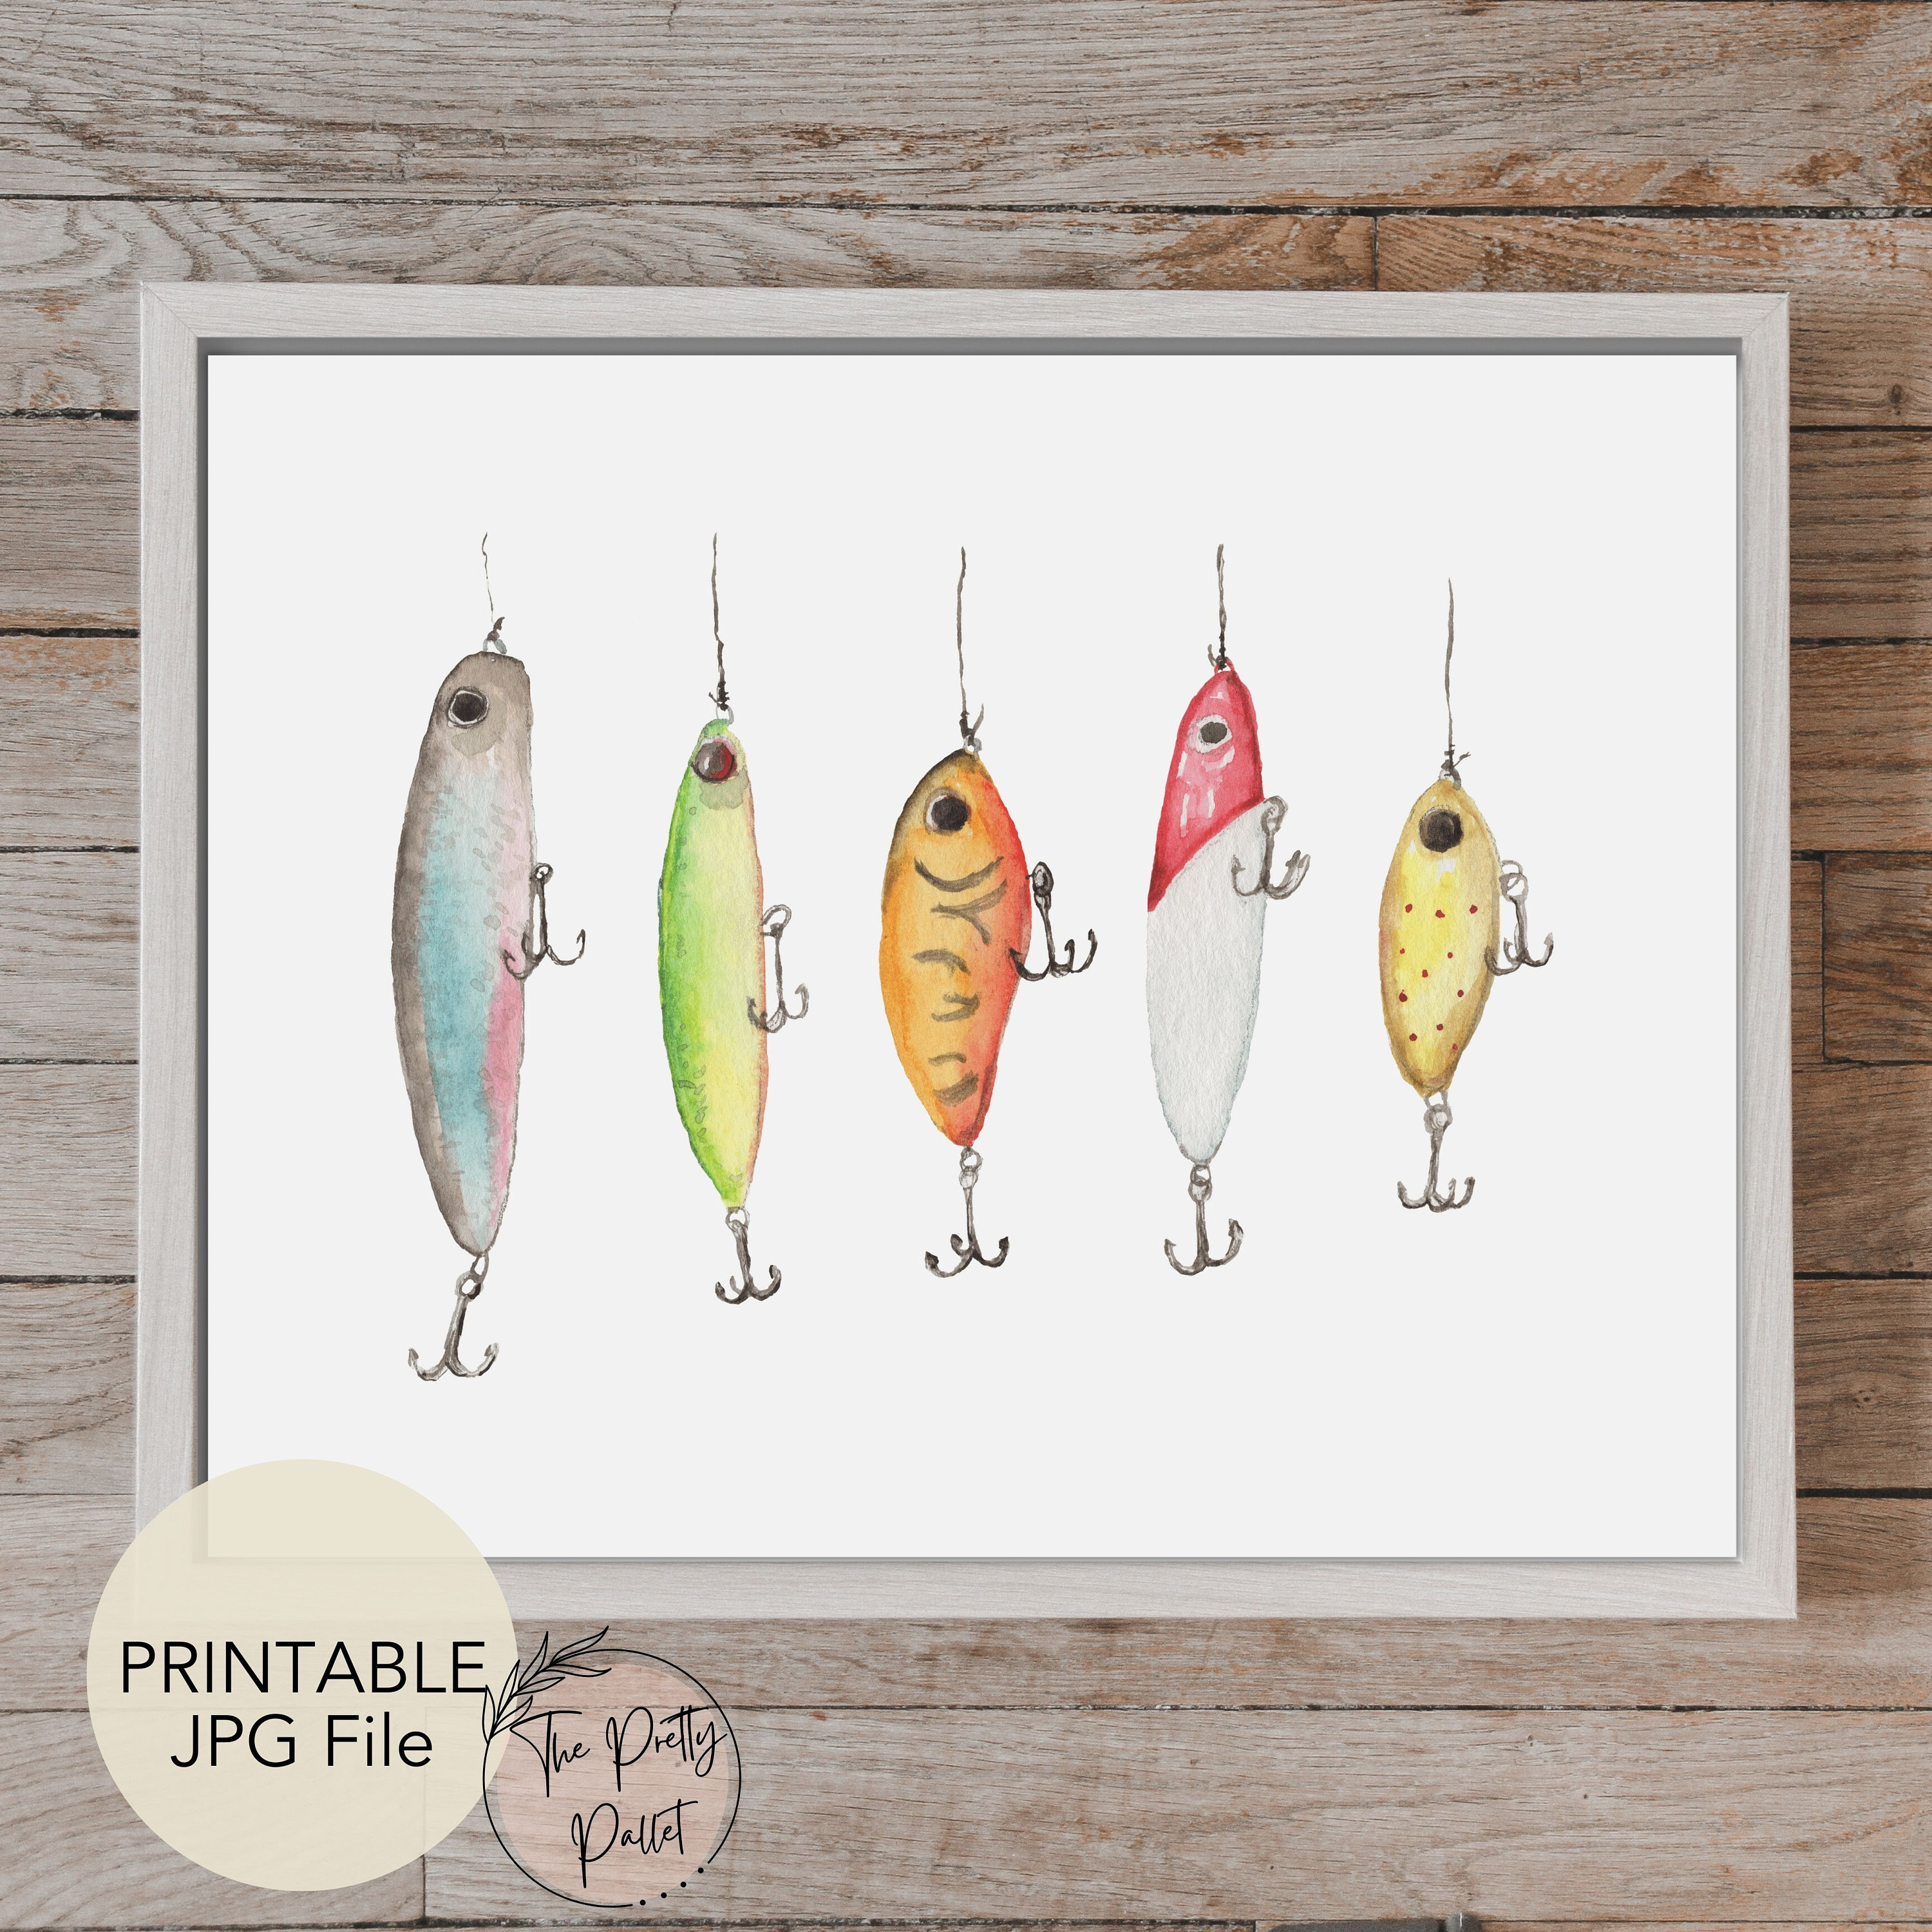 Fishing Lures Watercolor Painting, Printable Wall Art, DIGITAL